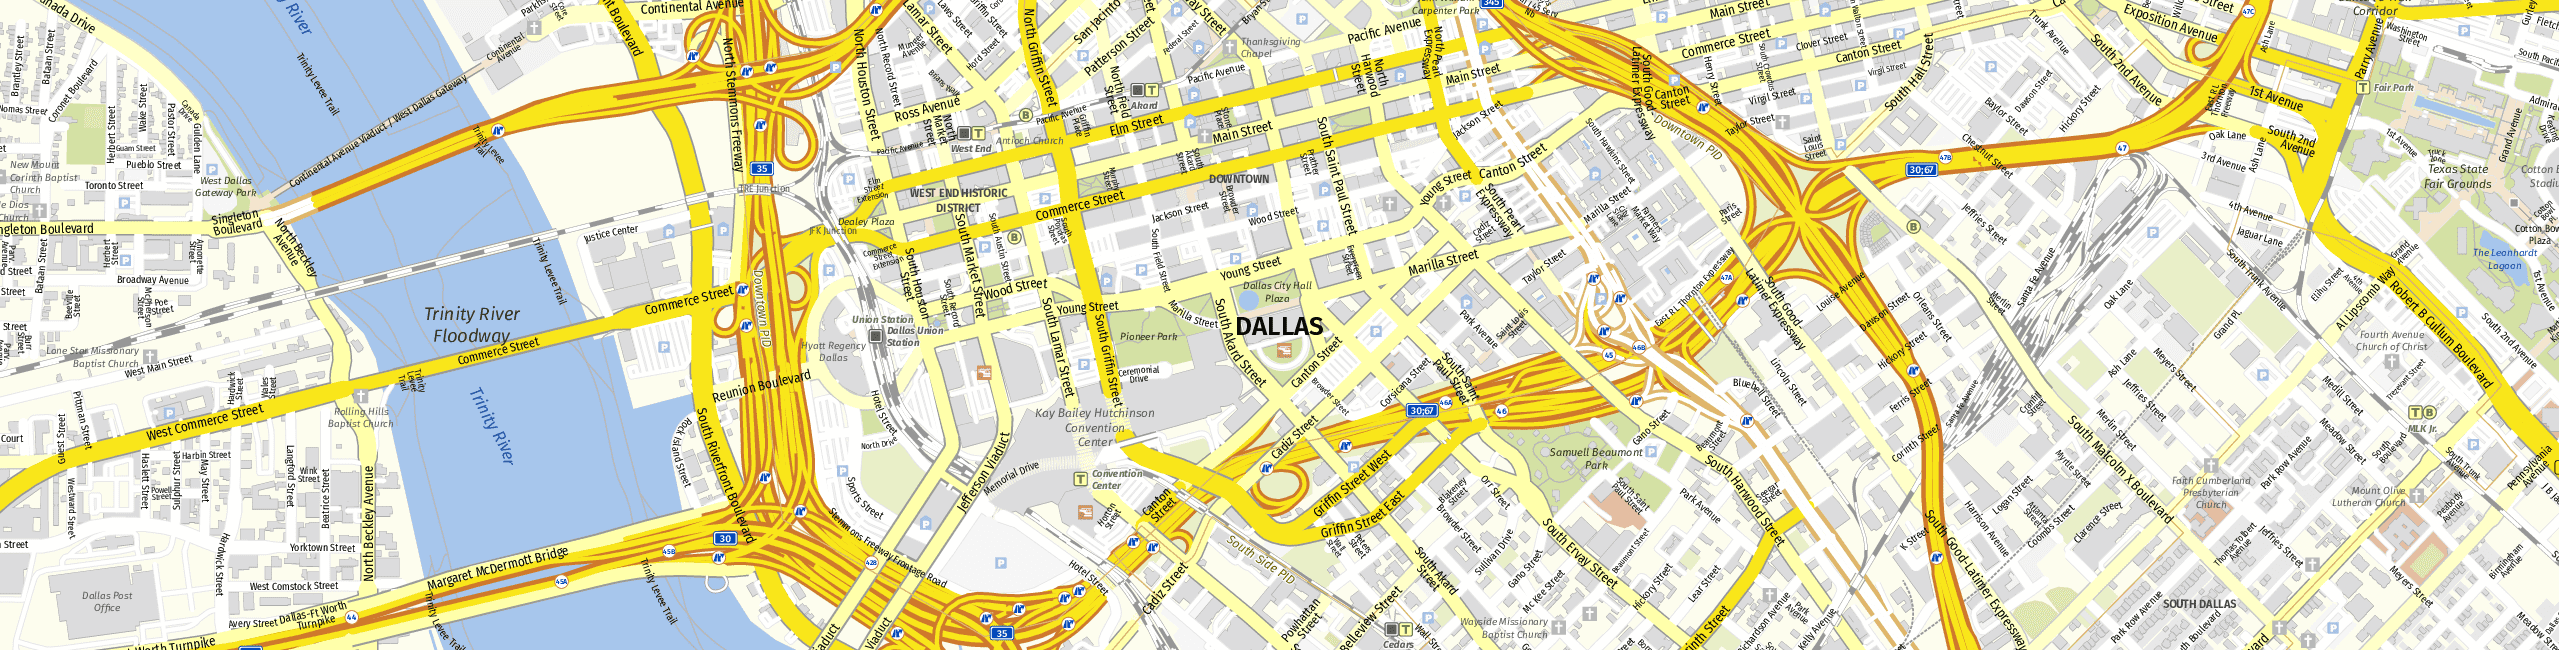 Stadtplan Dallas zum Downloaden.